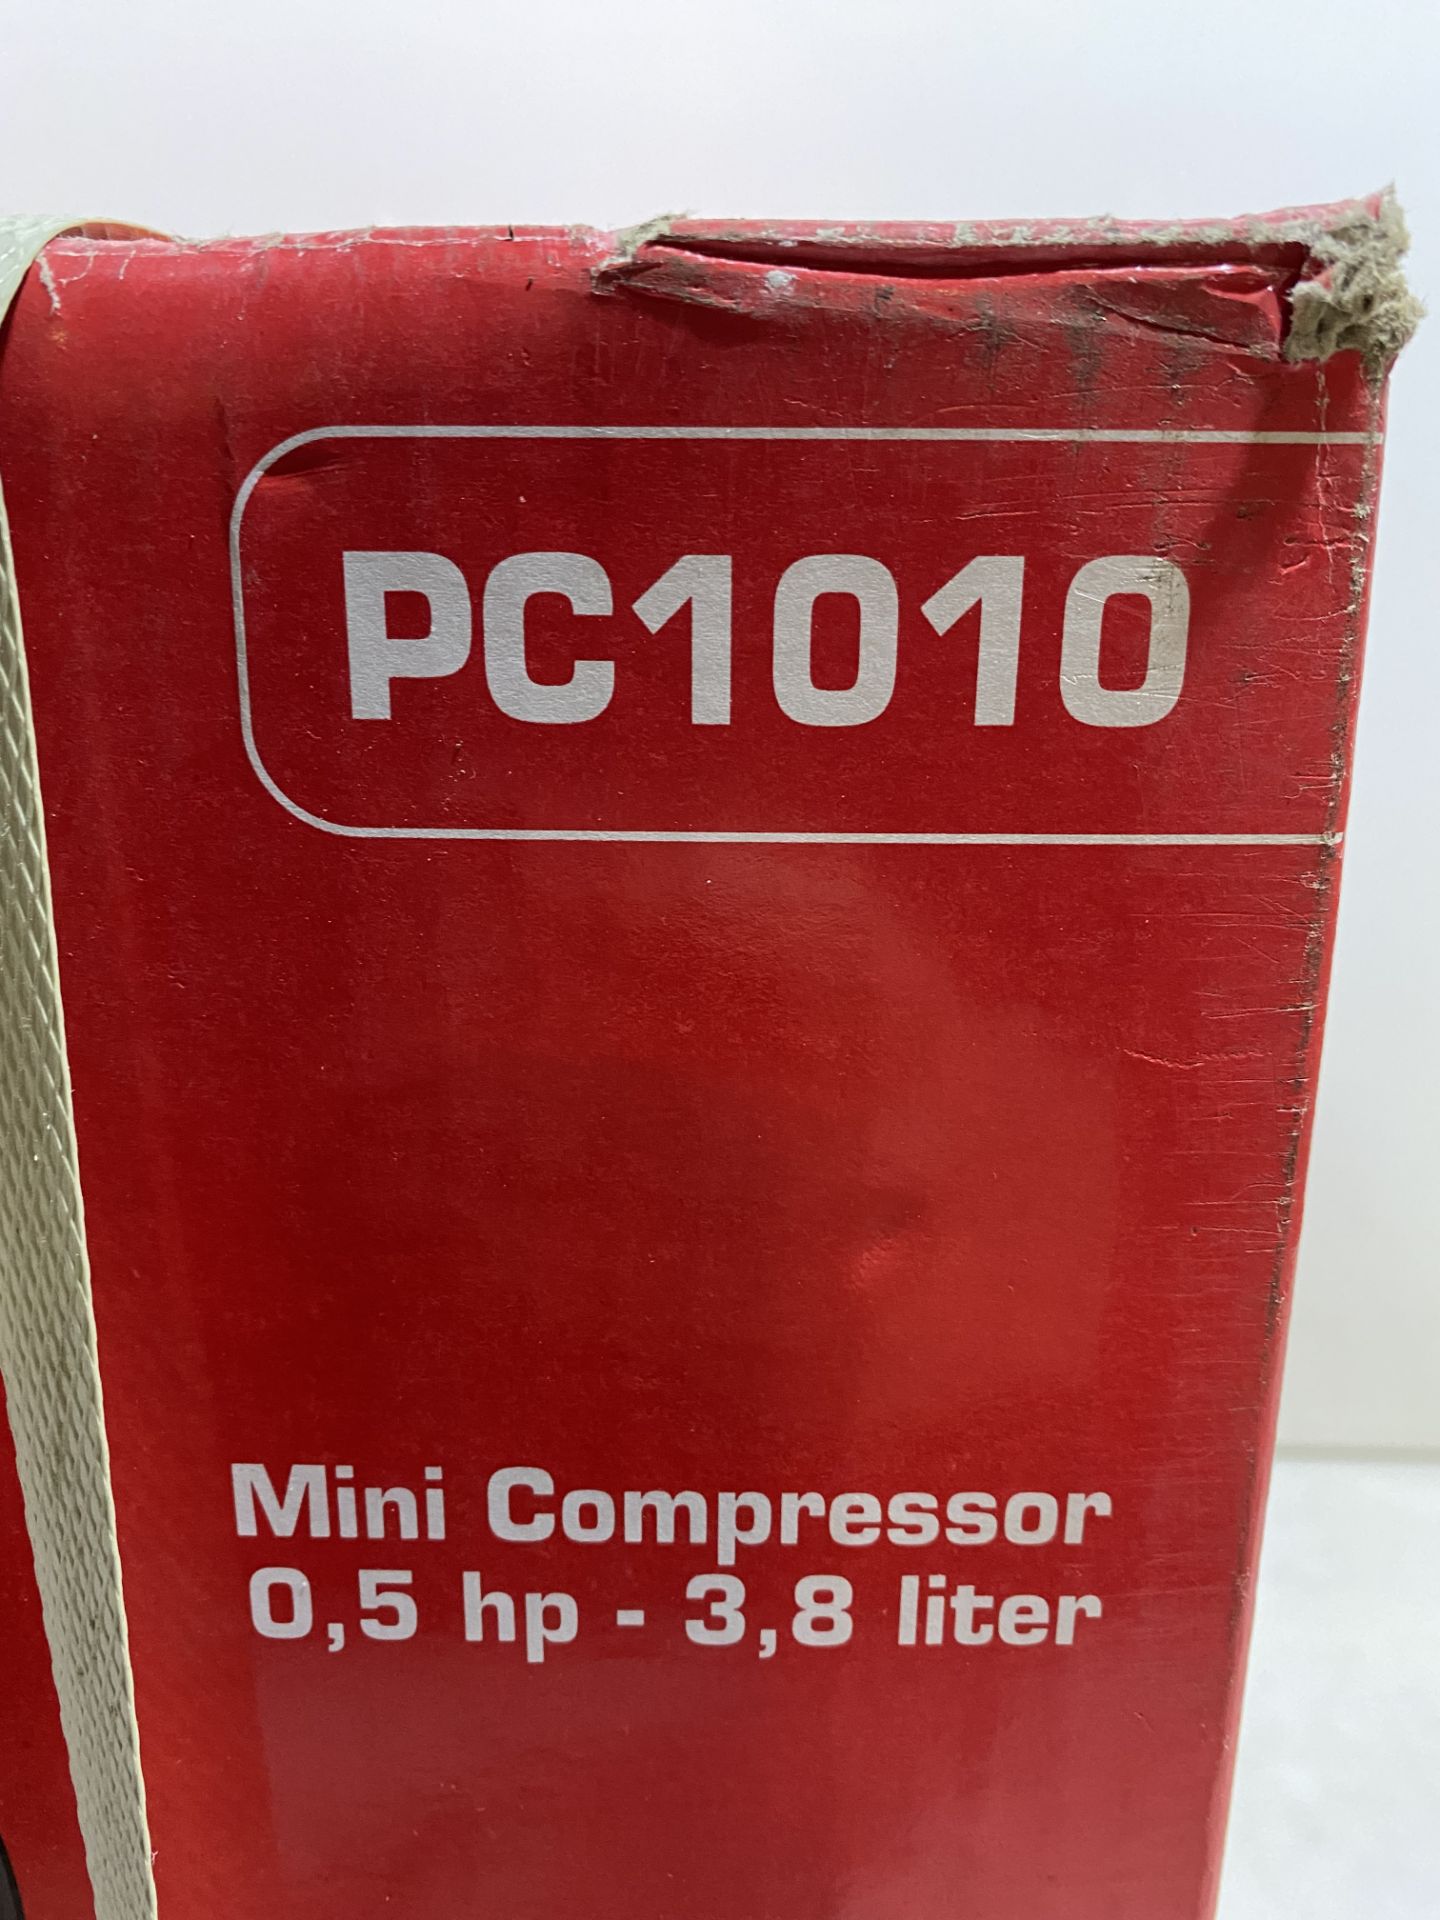 Senco PC1010 Hand Carry Compressor 3.8L 230v 0.5HP | RRP £220 - Image 2 of 3